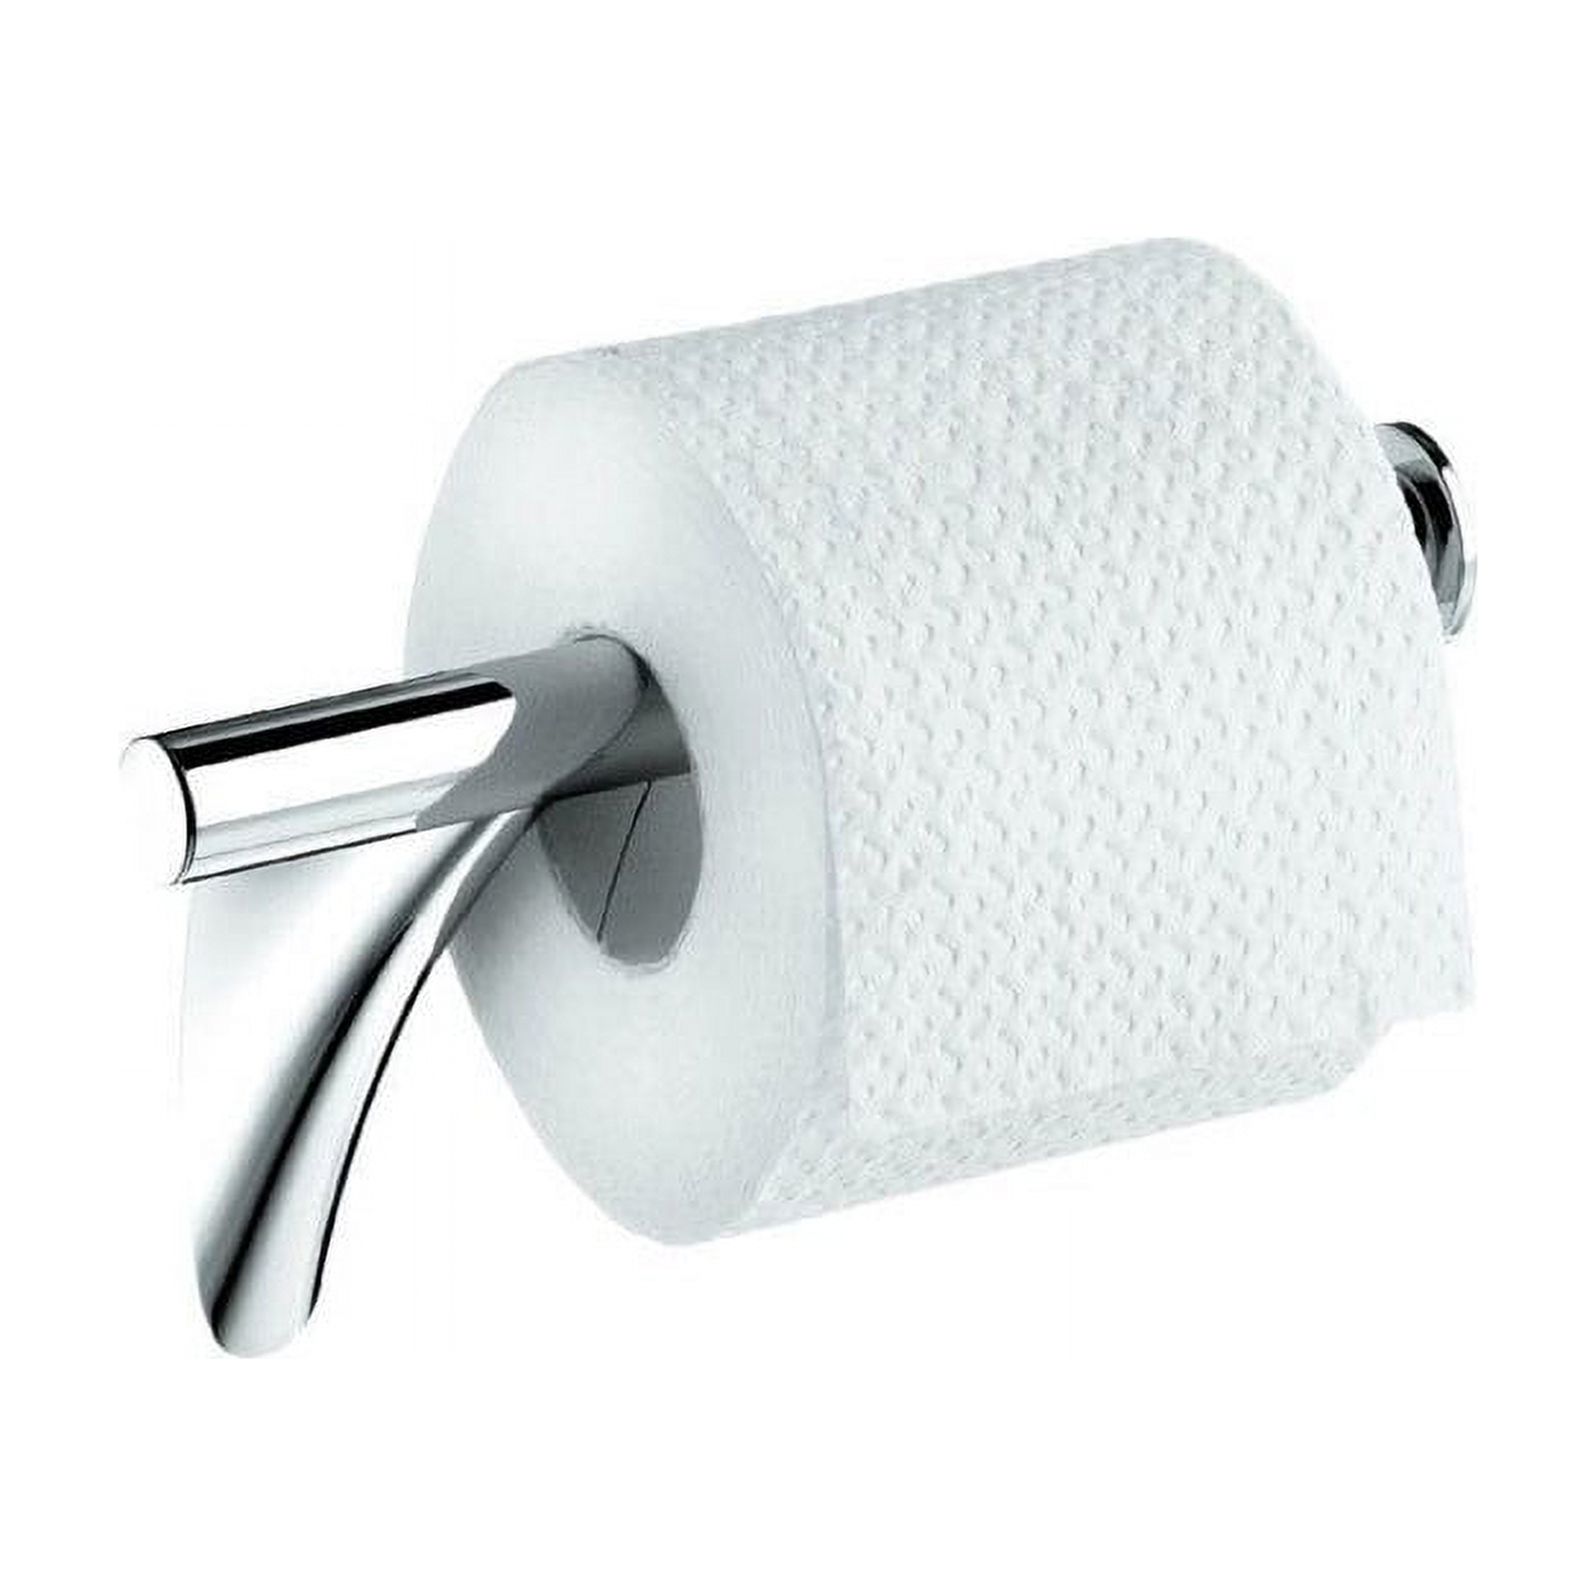 Hansgrohe Axor 42236000 Massaud Toilet Paper Holder Single, Chrome - image 1 of 2